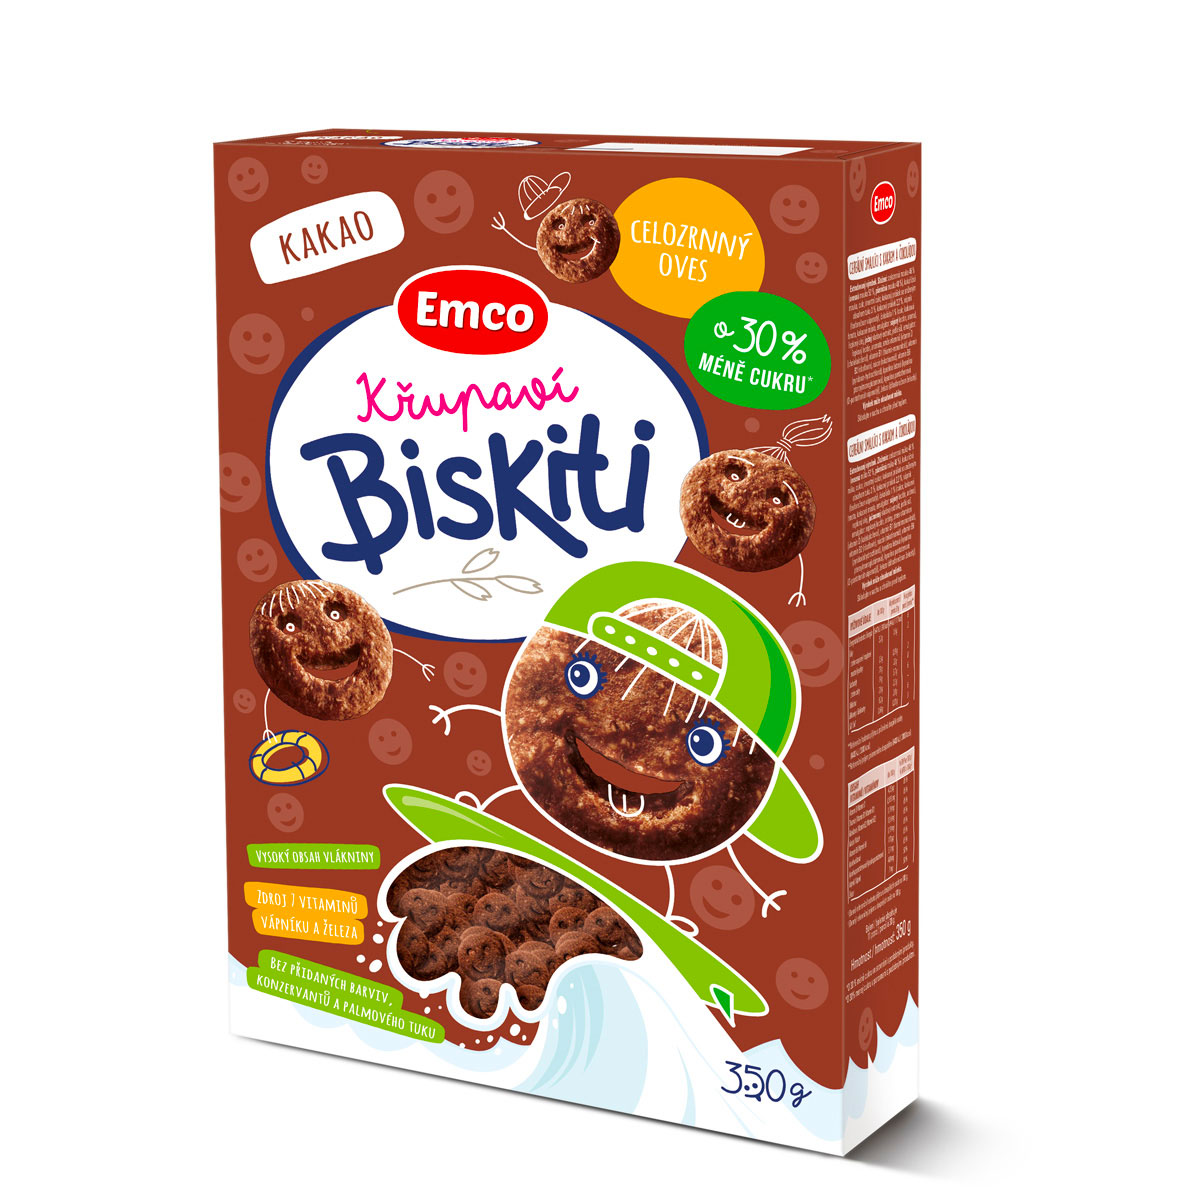 3D-KRUPAVI-BISKITI-350g-cokoladovi-V1-right-34-sRGB